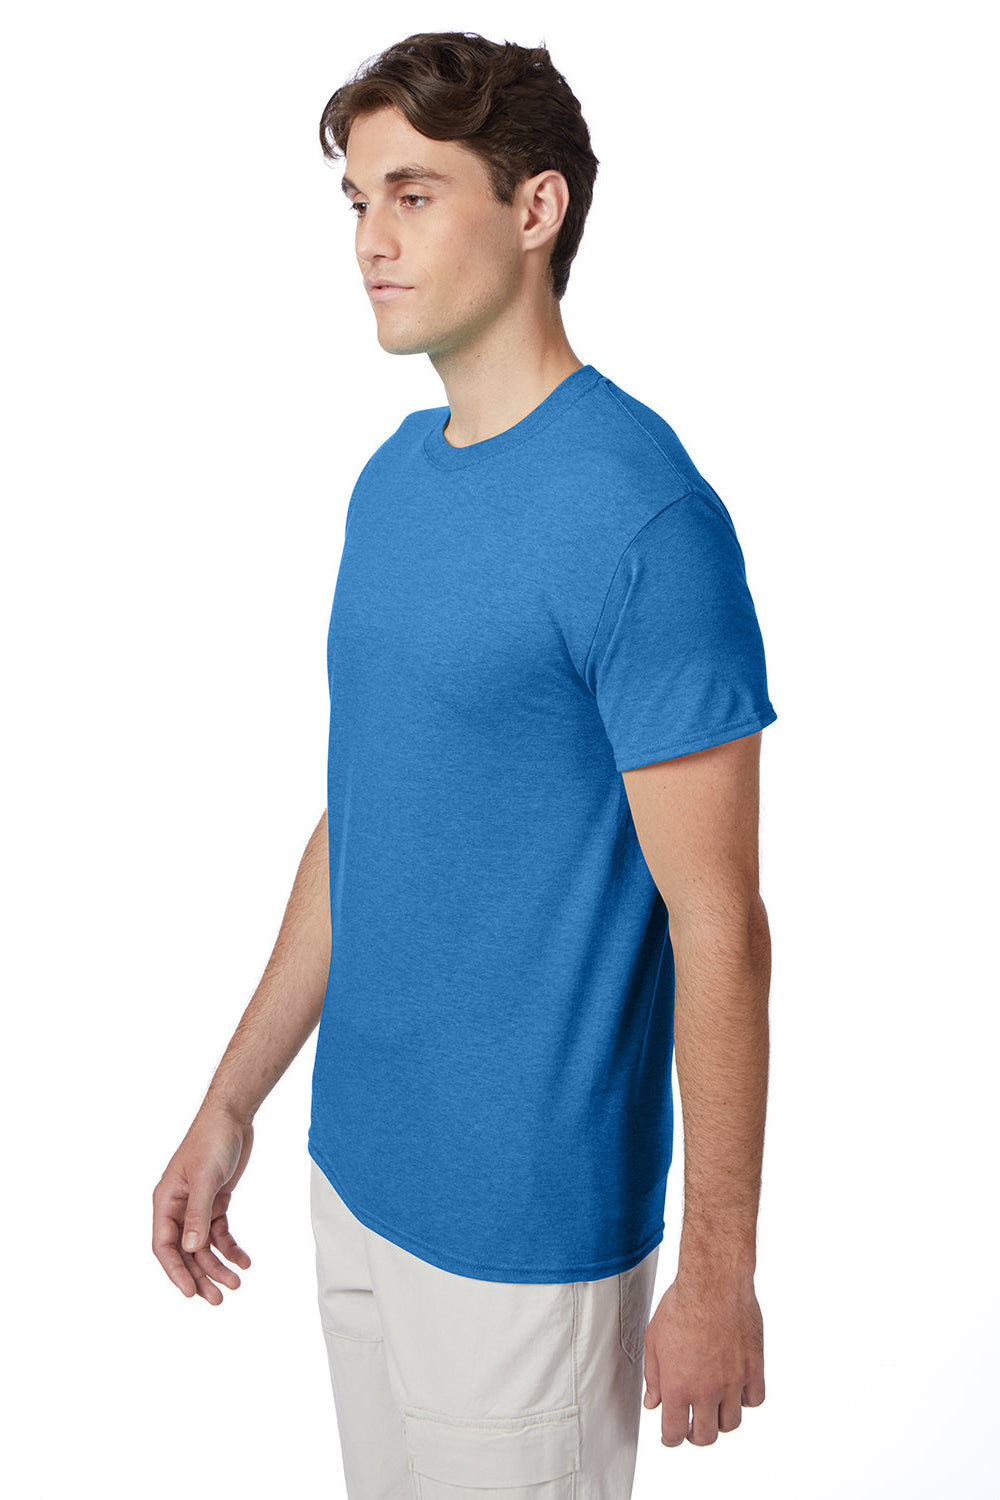 Hanes 42TB Mens X-Temp FreshIQ Moisture Wicking Short Sleeve Crewneck T-Shirt Heather Bonnet Blue 3Q